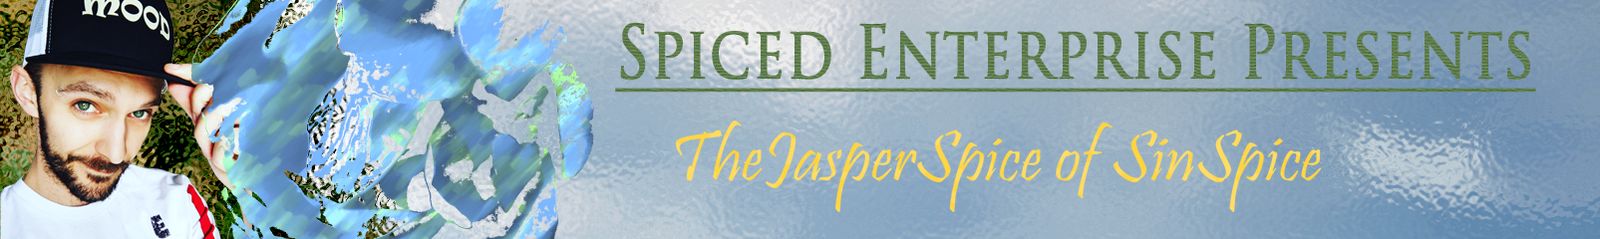 Spiced enterprise presents: Jasper Spice